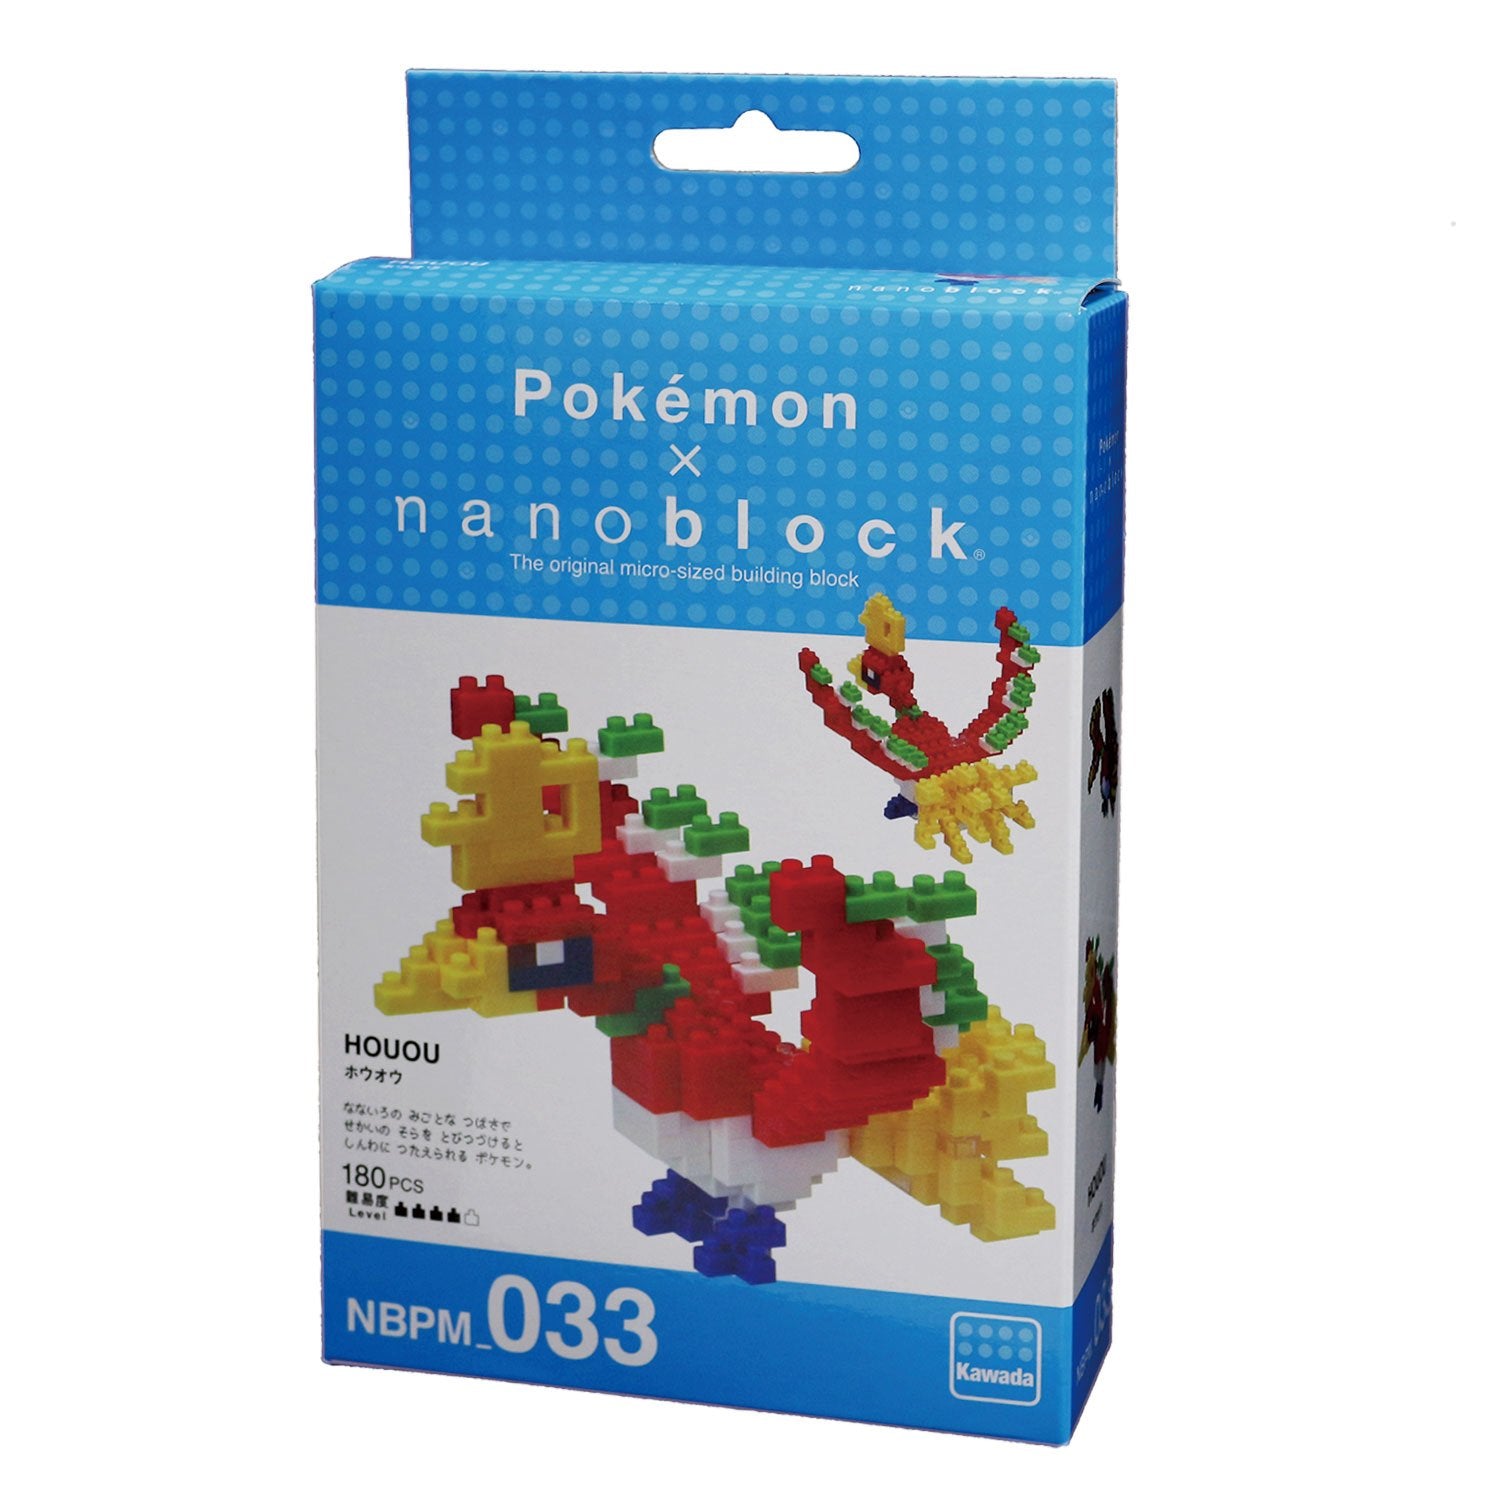 nanoblock Ho-Oh Pokemon Series Building Kit (NBPM033)